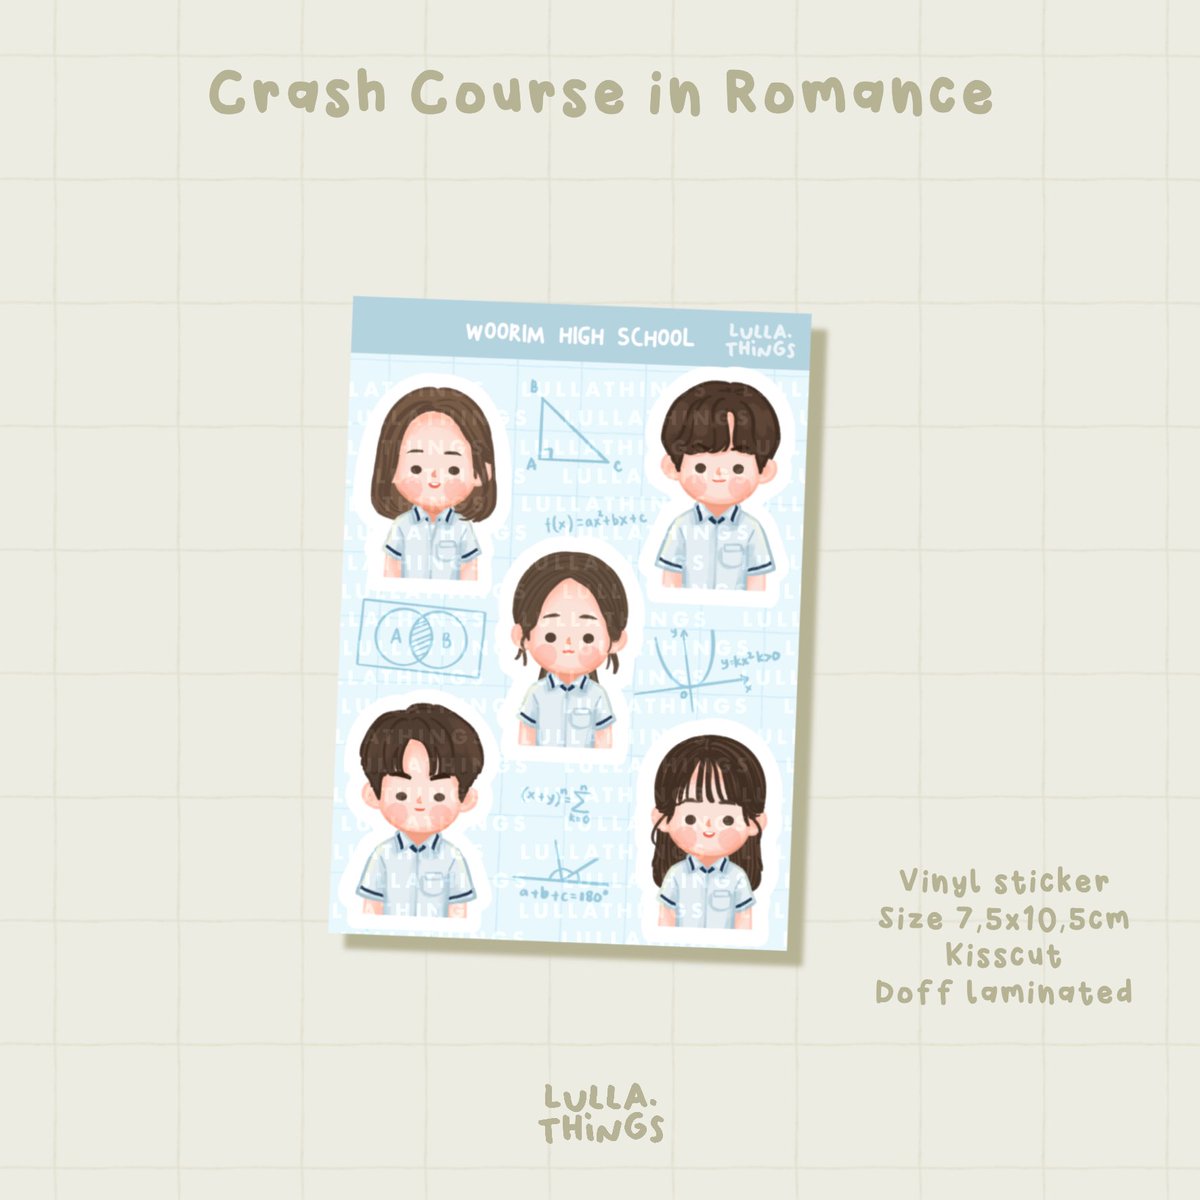 Merchandise - CRASH COURSE IN ROMANCE

✅keychain
✅sticker sheet
✅freebies included

available on SHOPEE 
beacons.ai/lullathings2

#CrashCourseInRomanceEp10 #CrashCourseInRomance #crashcourse #iltascandal #일타스캔들 #JungKyungHo #JeonDoYeon #ChoiChiYeol